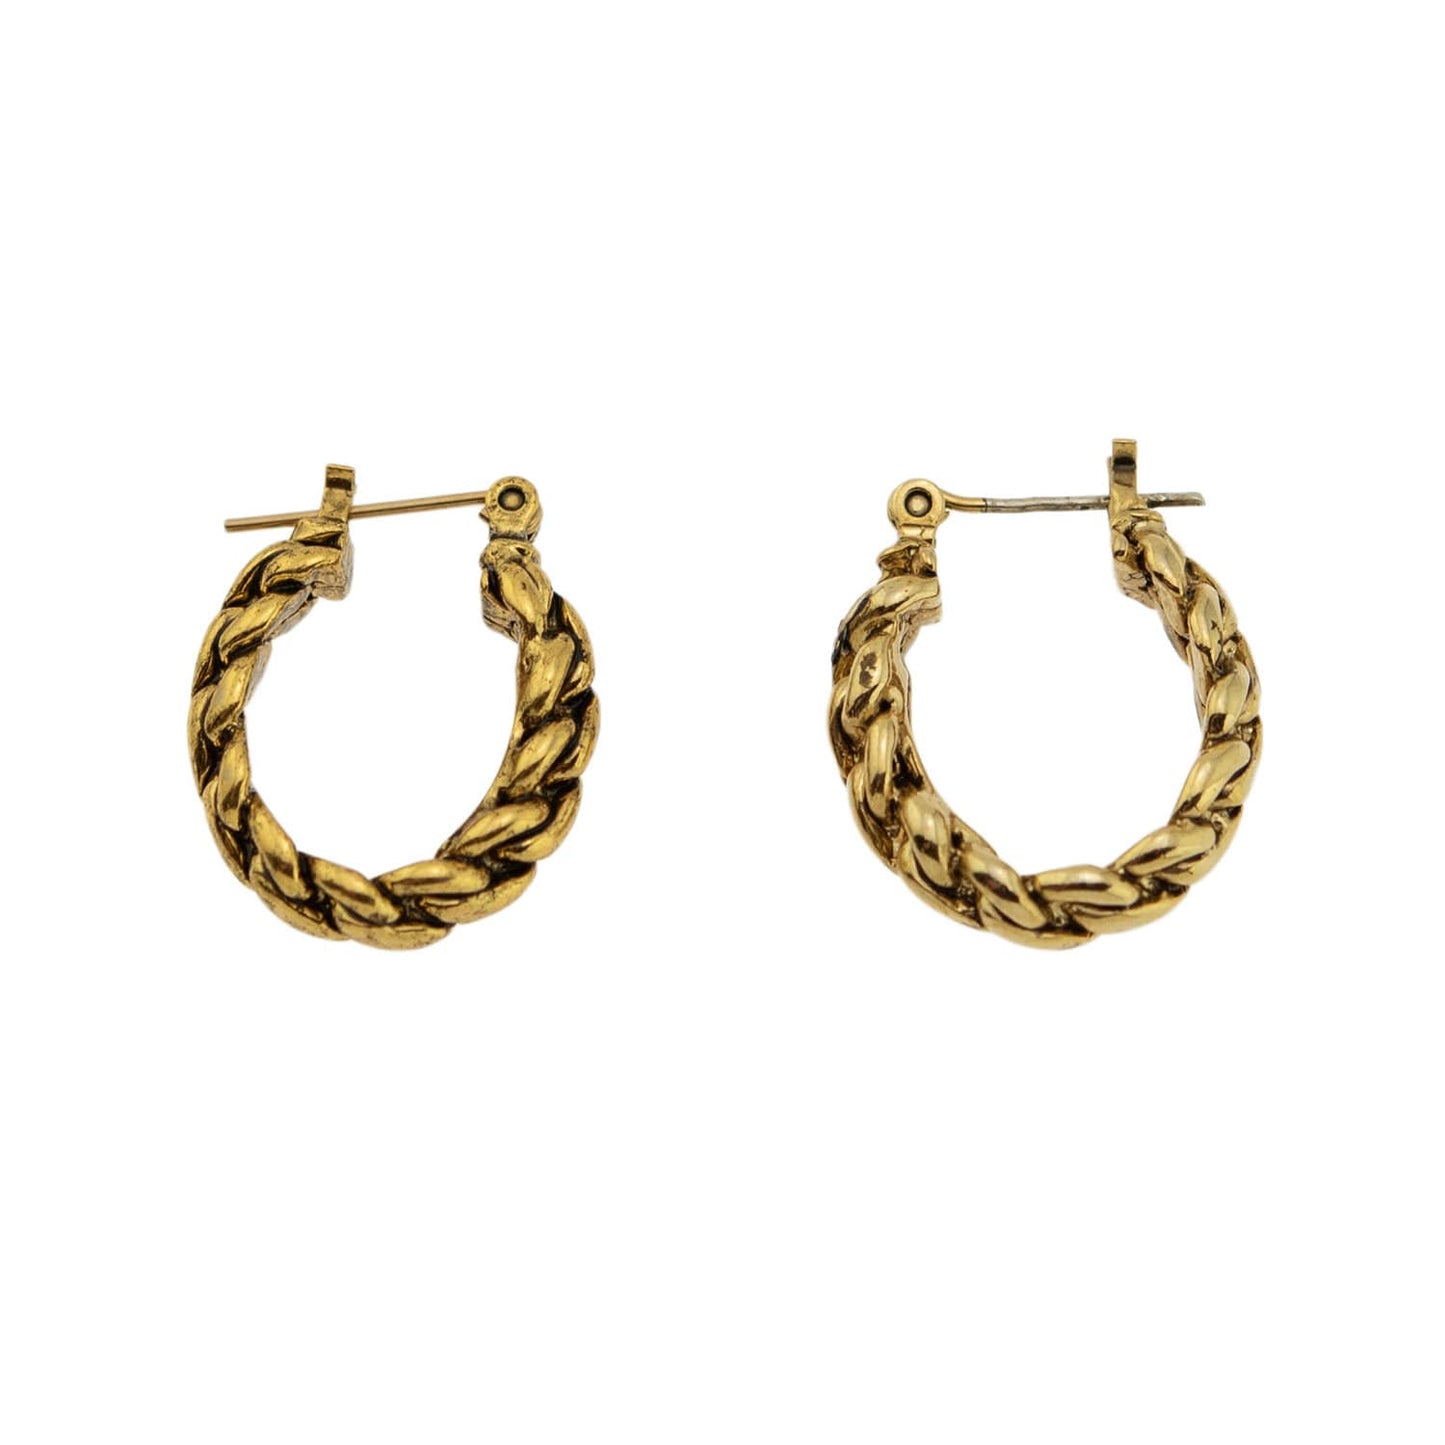 Vintage Earrings Oscar De La Renta Twisted Rope Antique Gold Tone Hoops Earrings Hinged Clasp Womans #OS103